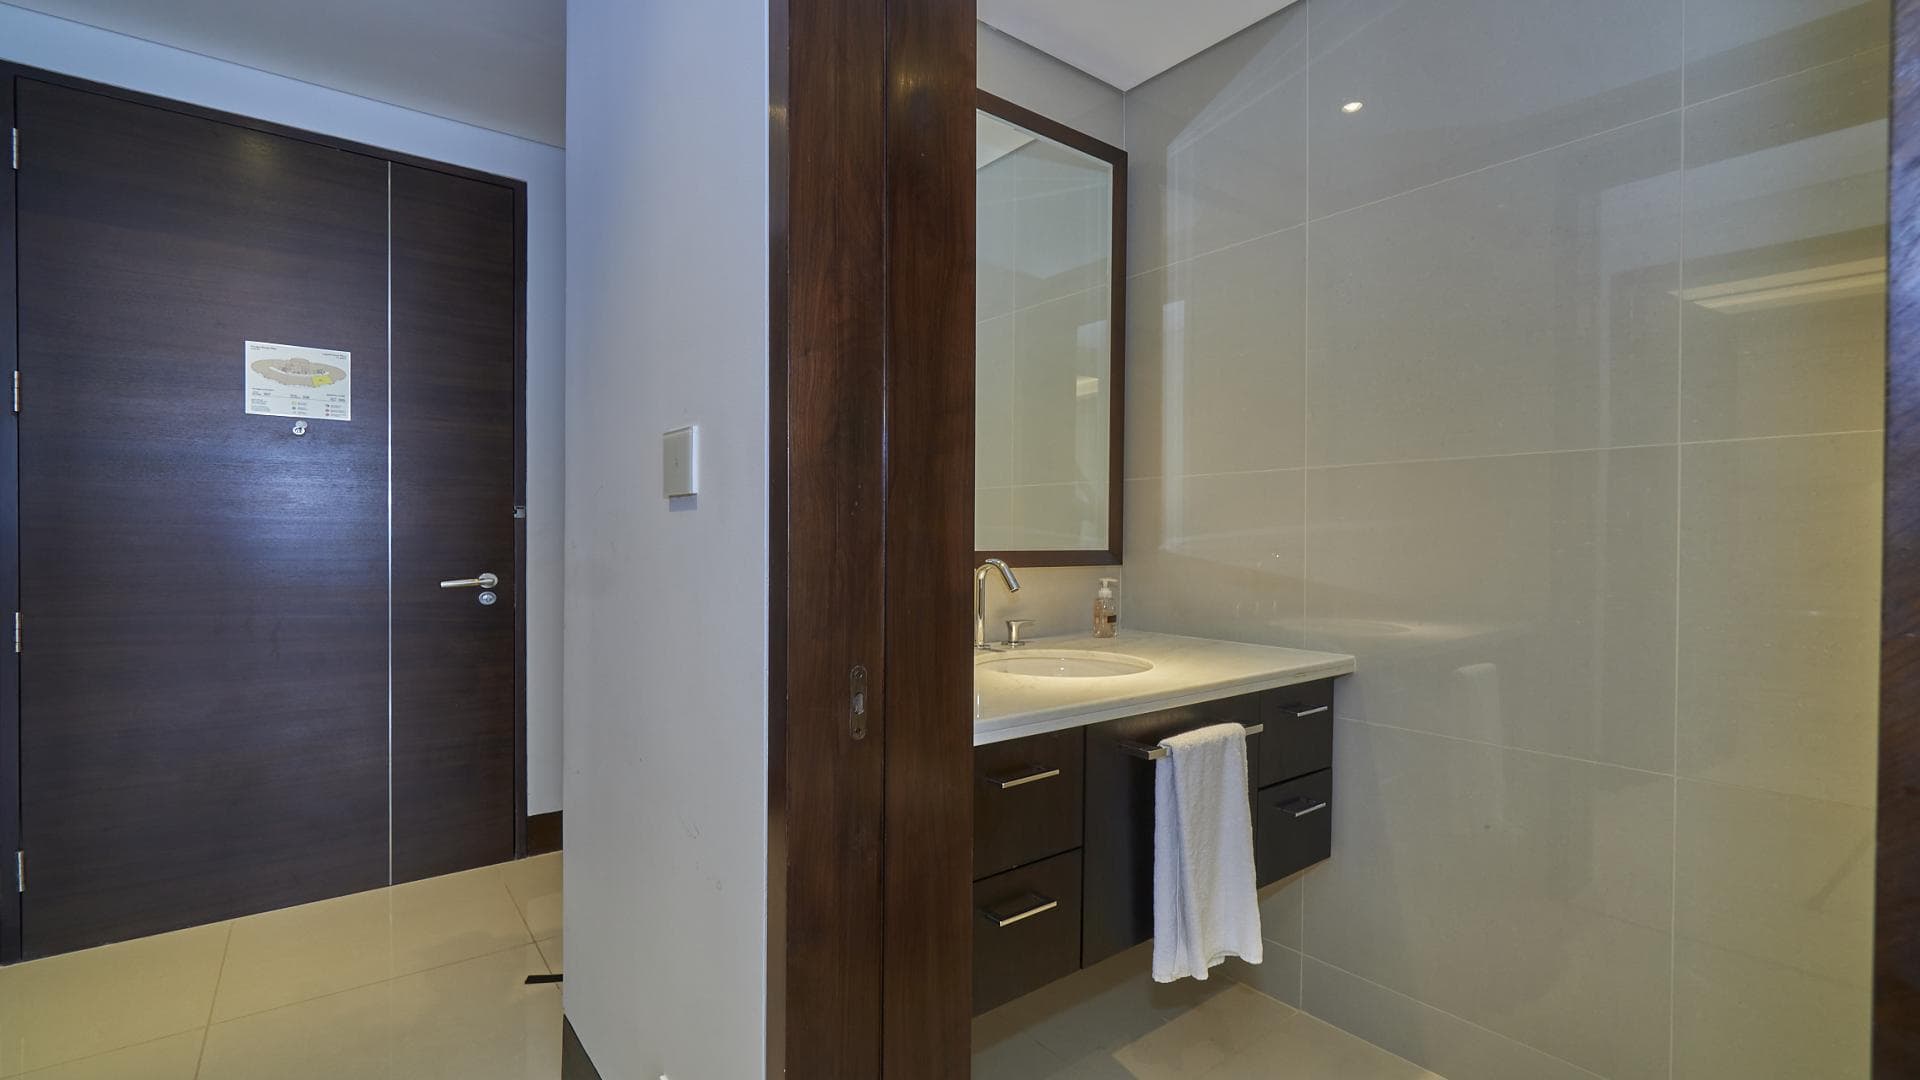 2 Bedroom Apartment For Sale Al Thamam 09 Lp36447 141be0d92e3e4900.jpg